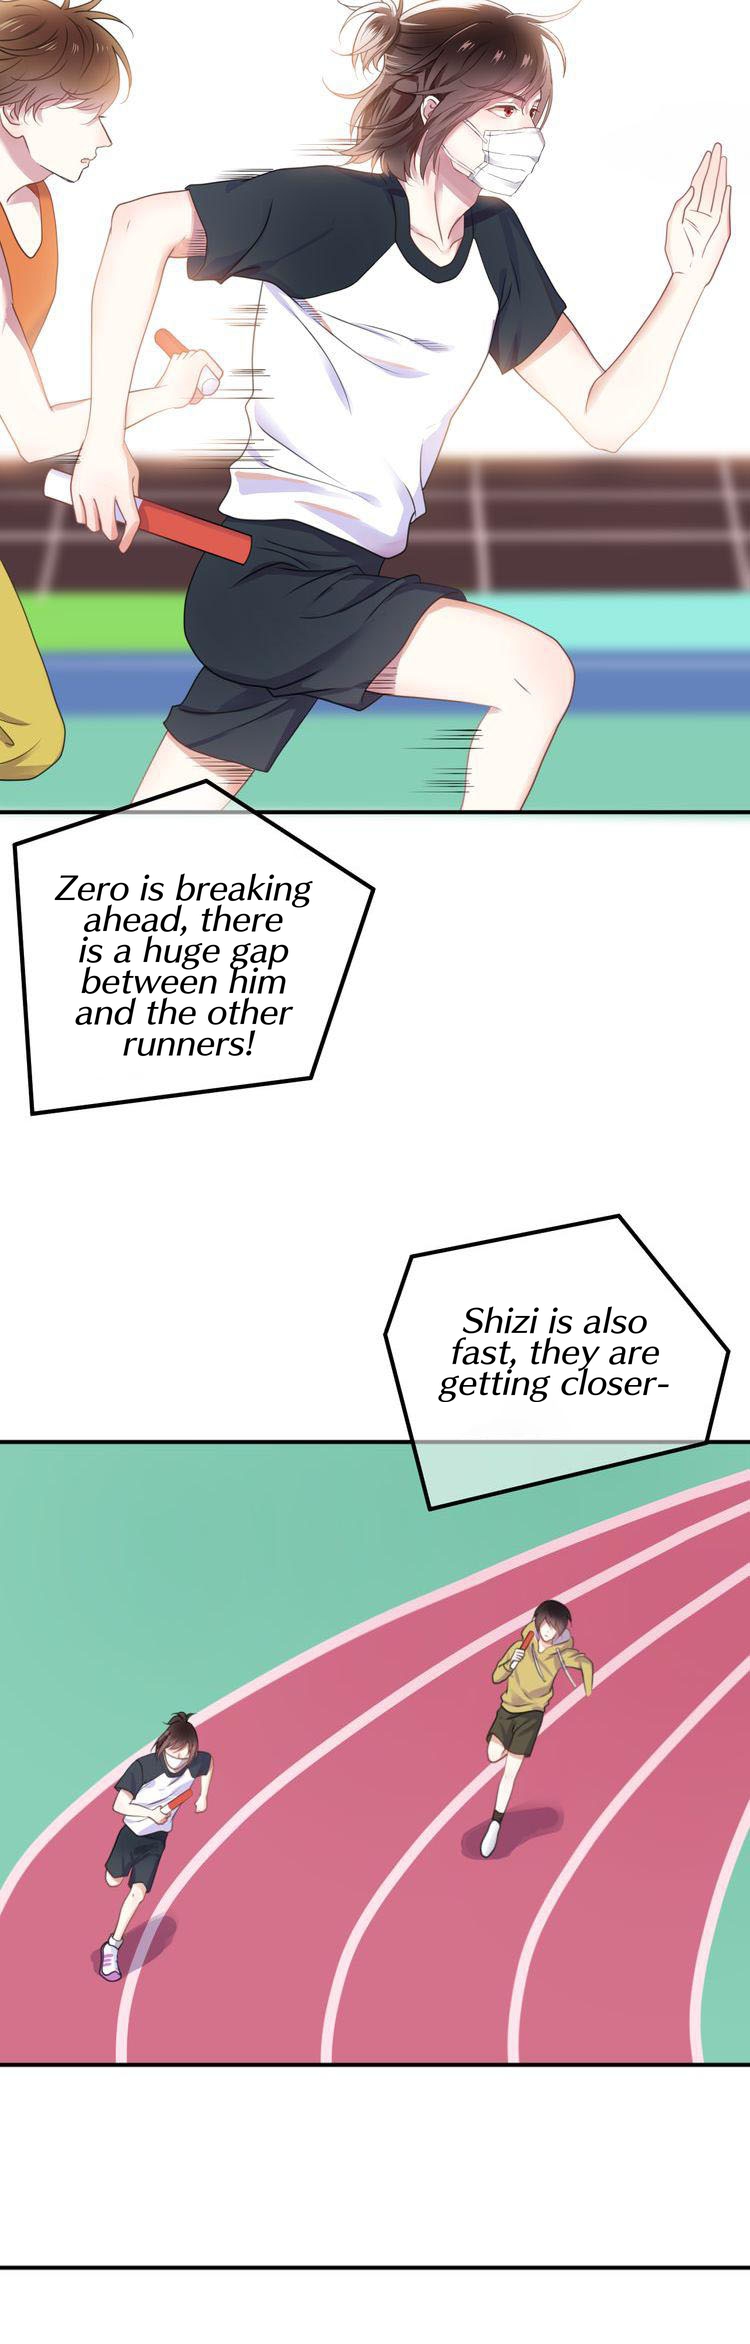 Zero Point Idol - Page 3